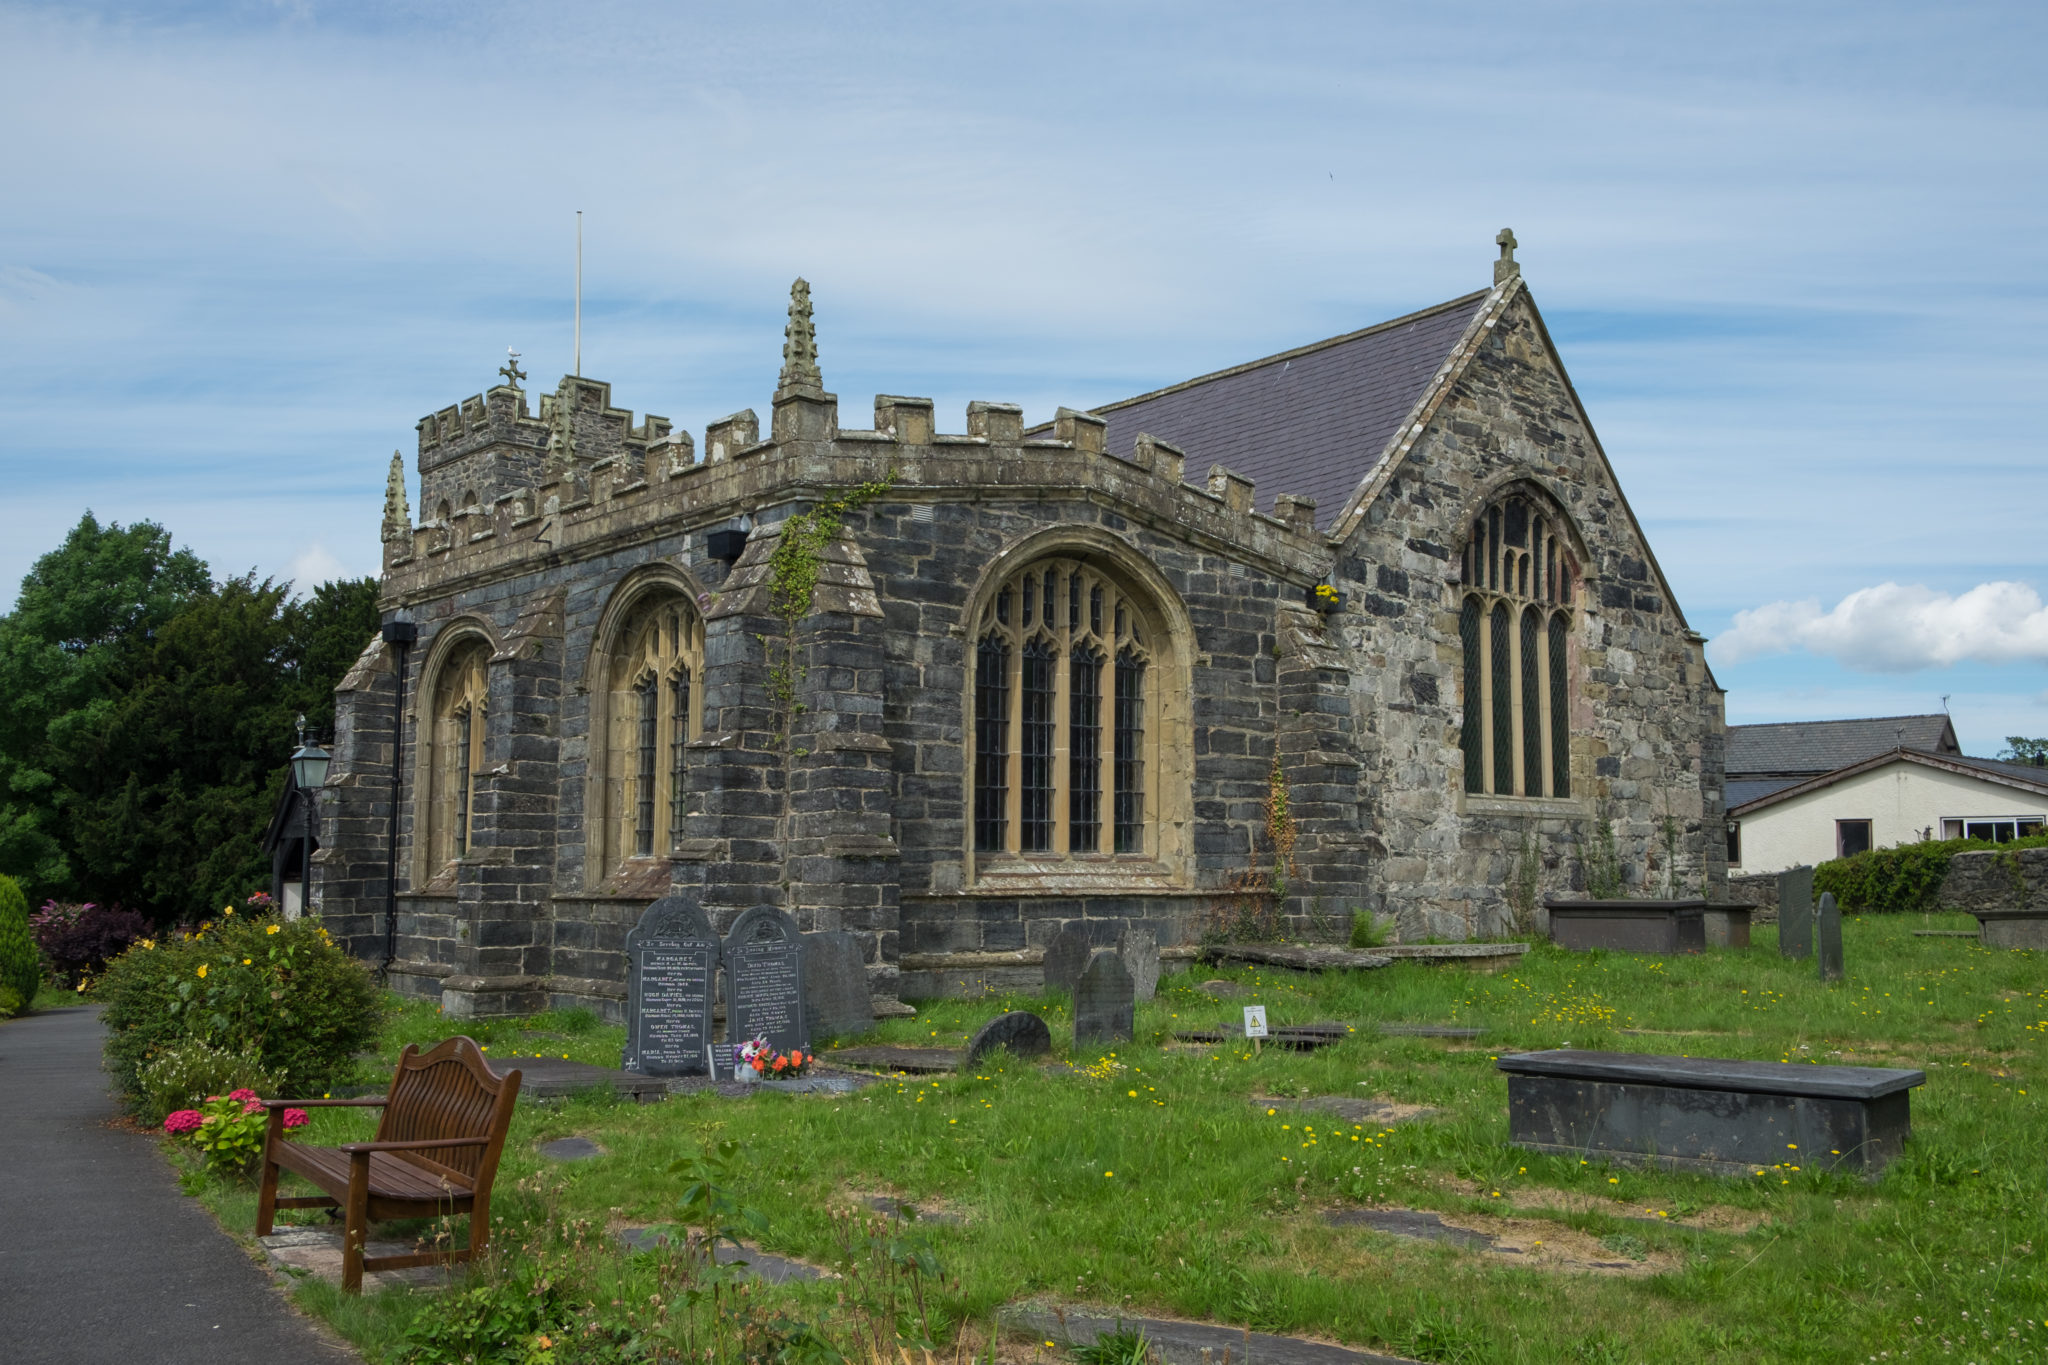 Saint Grwst Church in Llanrwst, Snowdonia national park